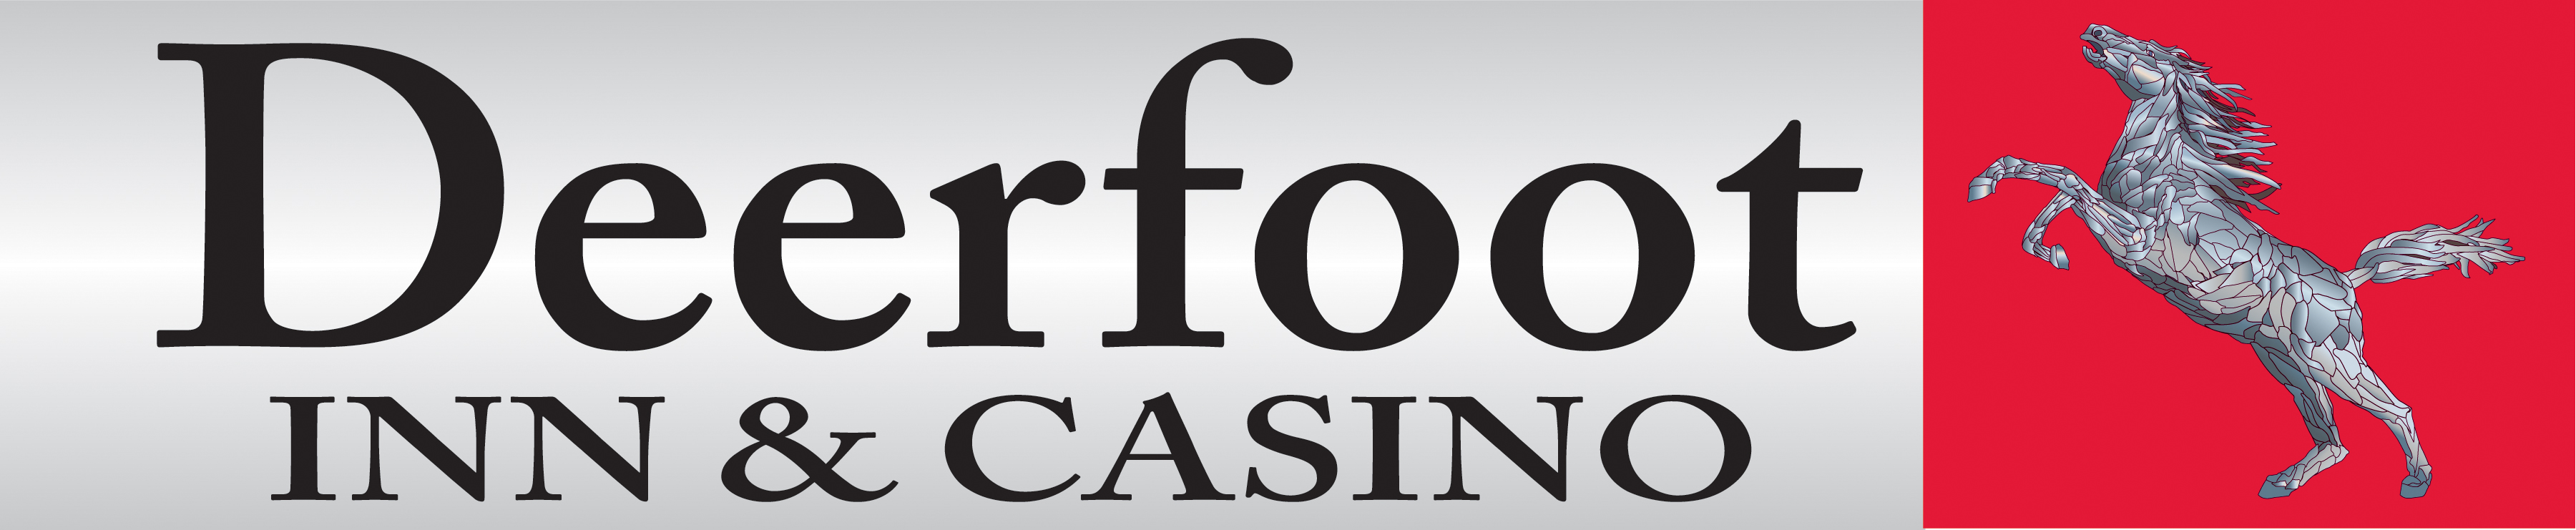 Deerfoot Inn and Casino logo